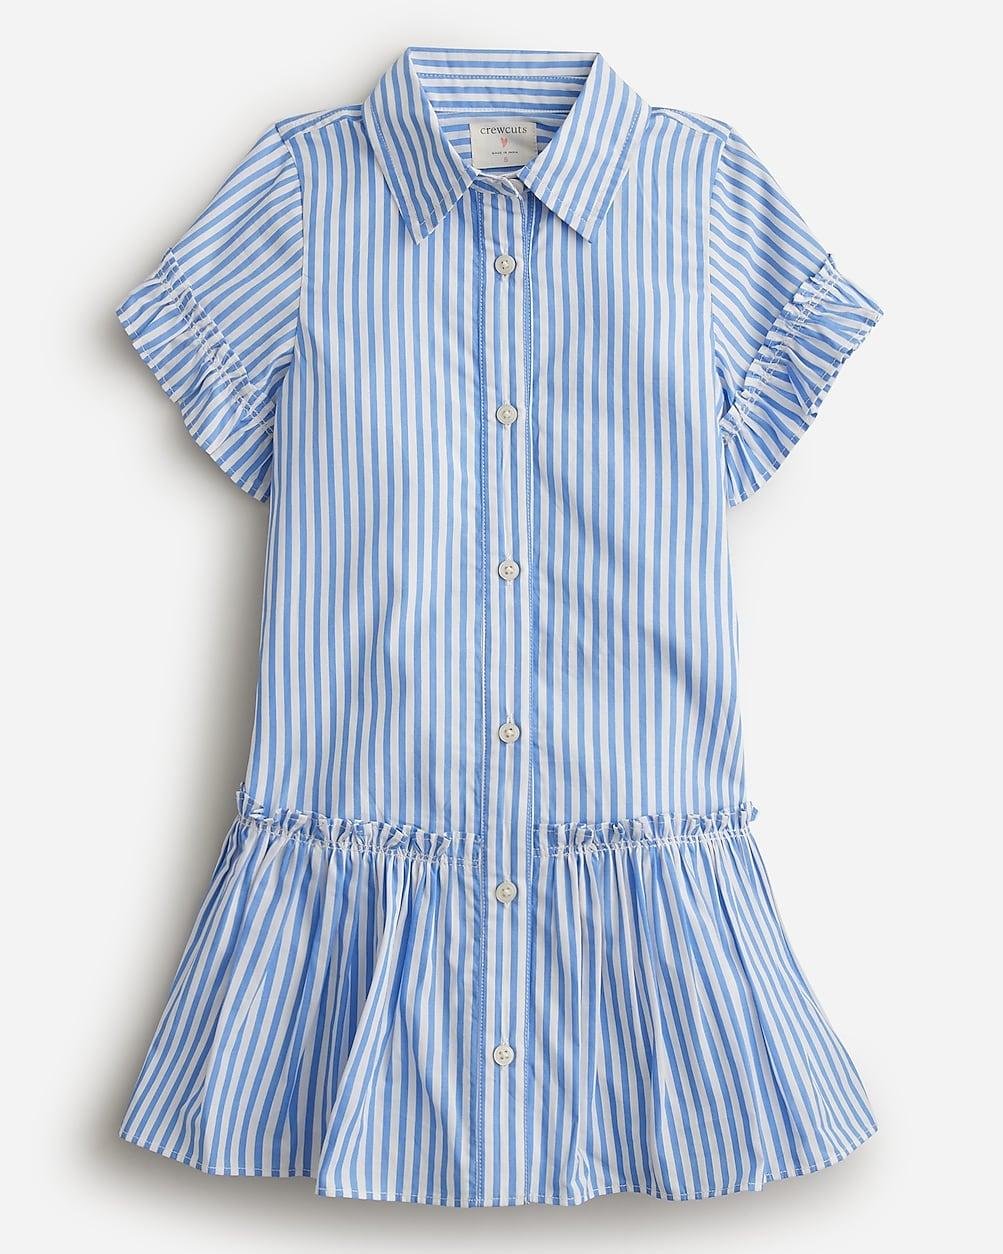 Girls' ruffle-hem shirtdress in cotton poplin by J.CREW